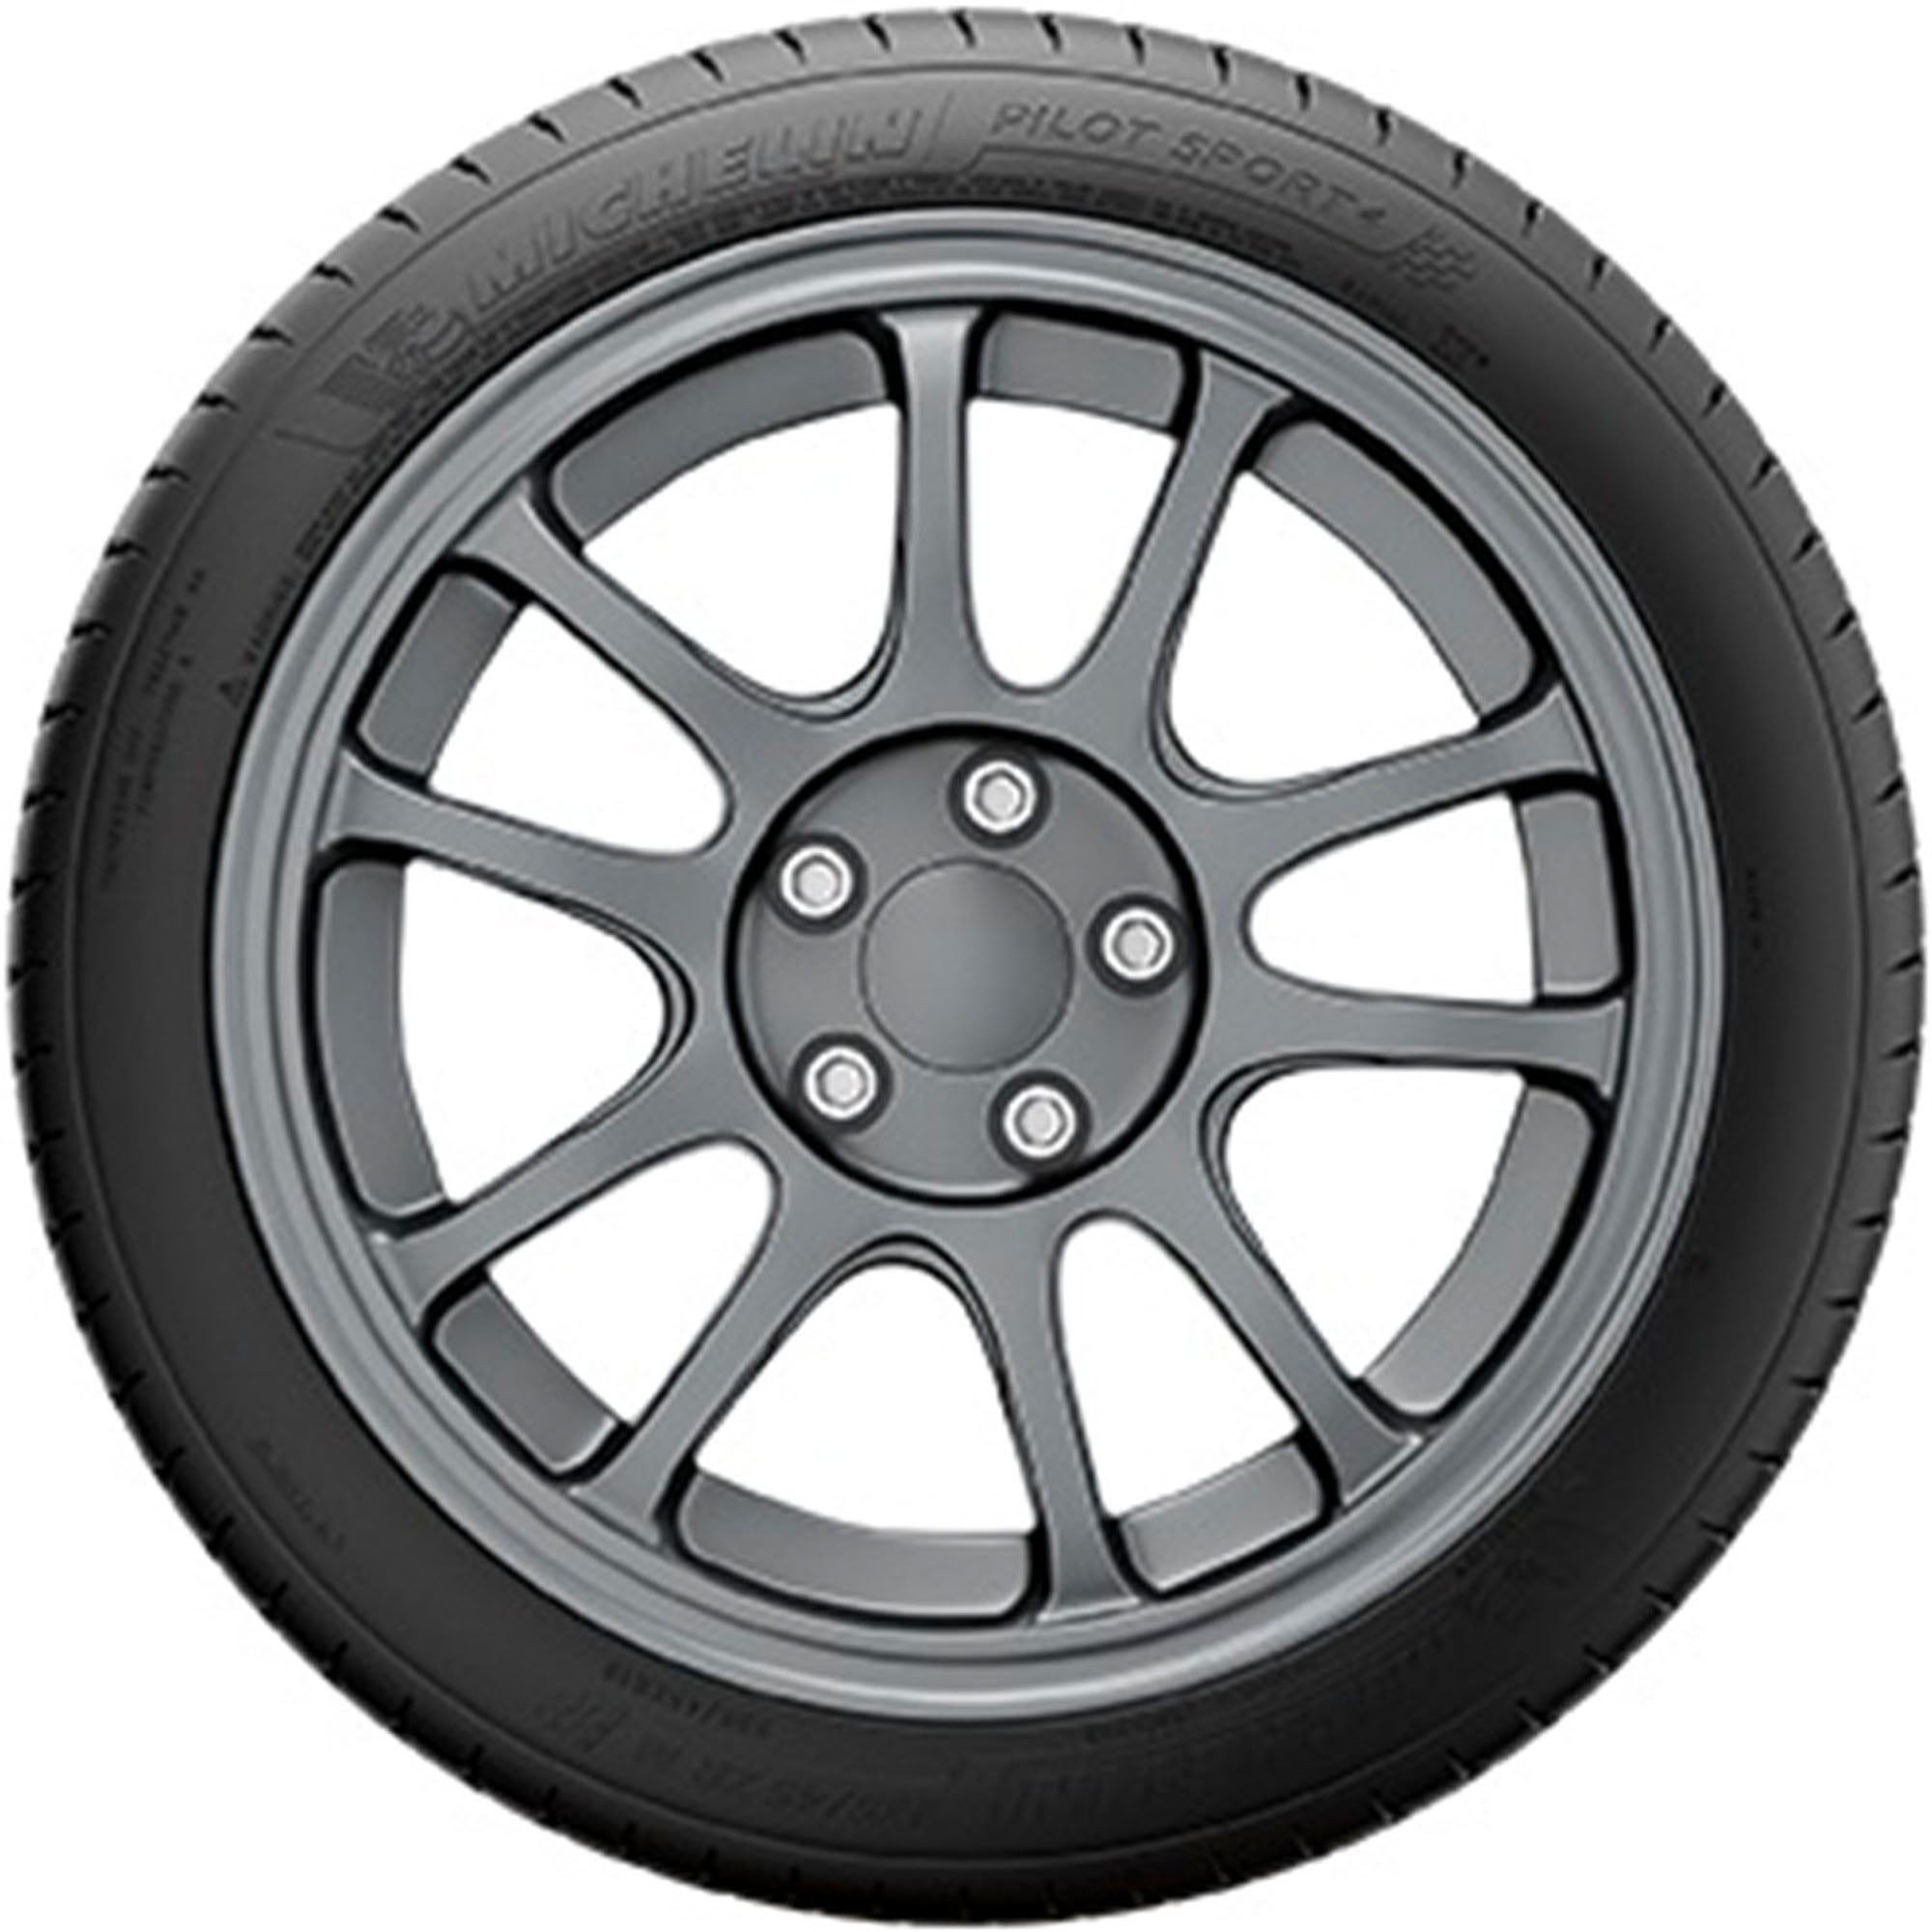 4 225/45ZR17 Pilot Sport Summer Tire Passenger Michelin 91Y